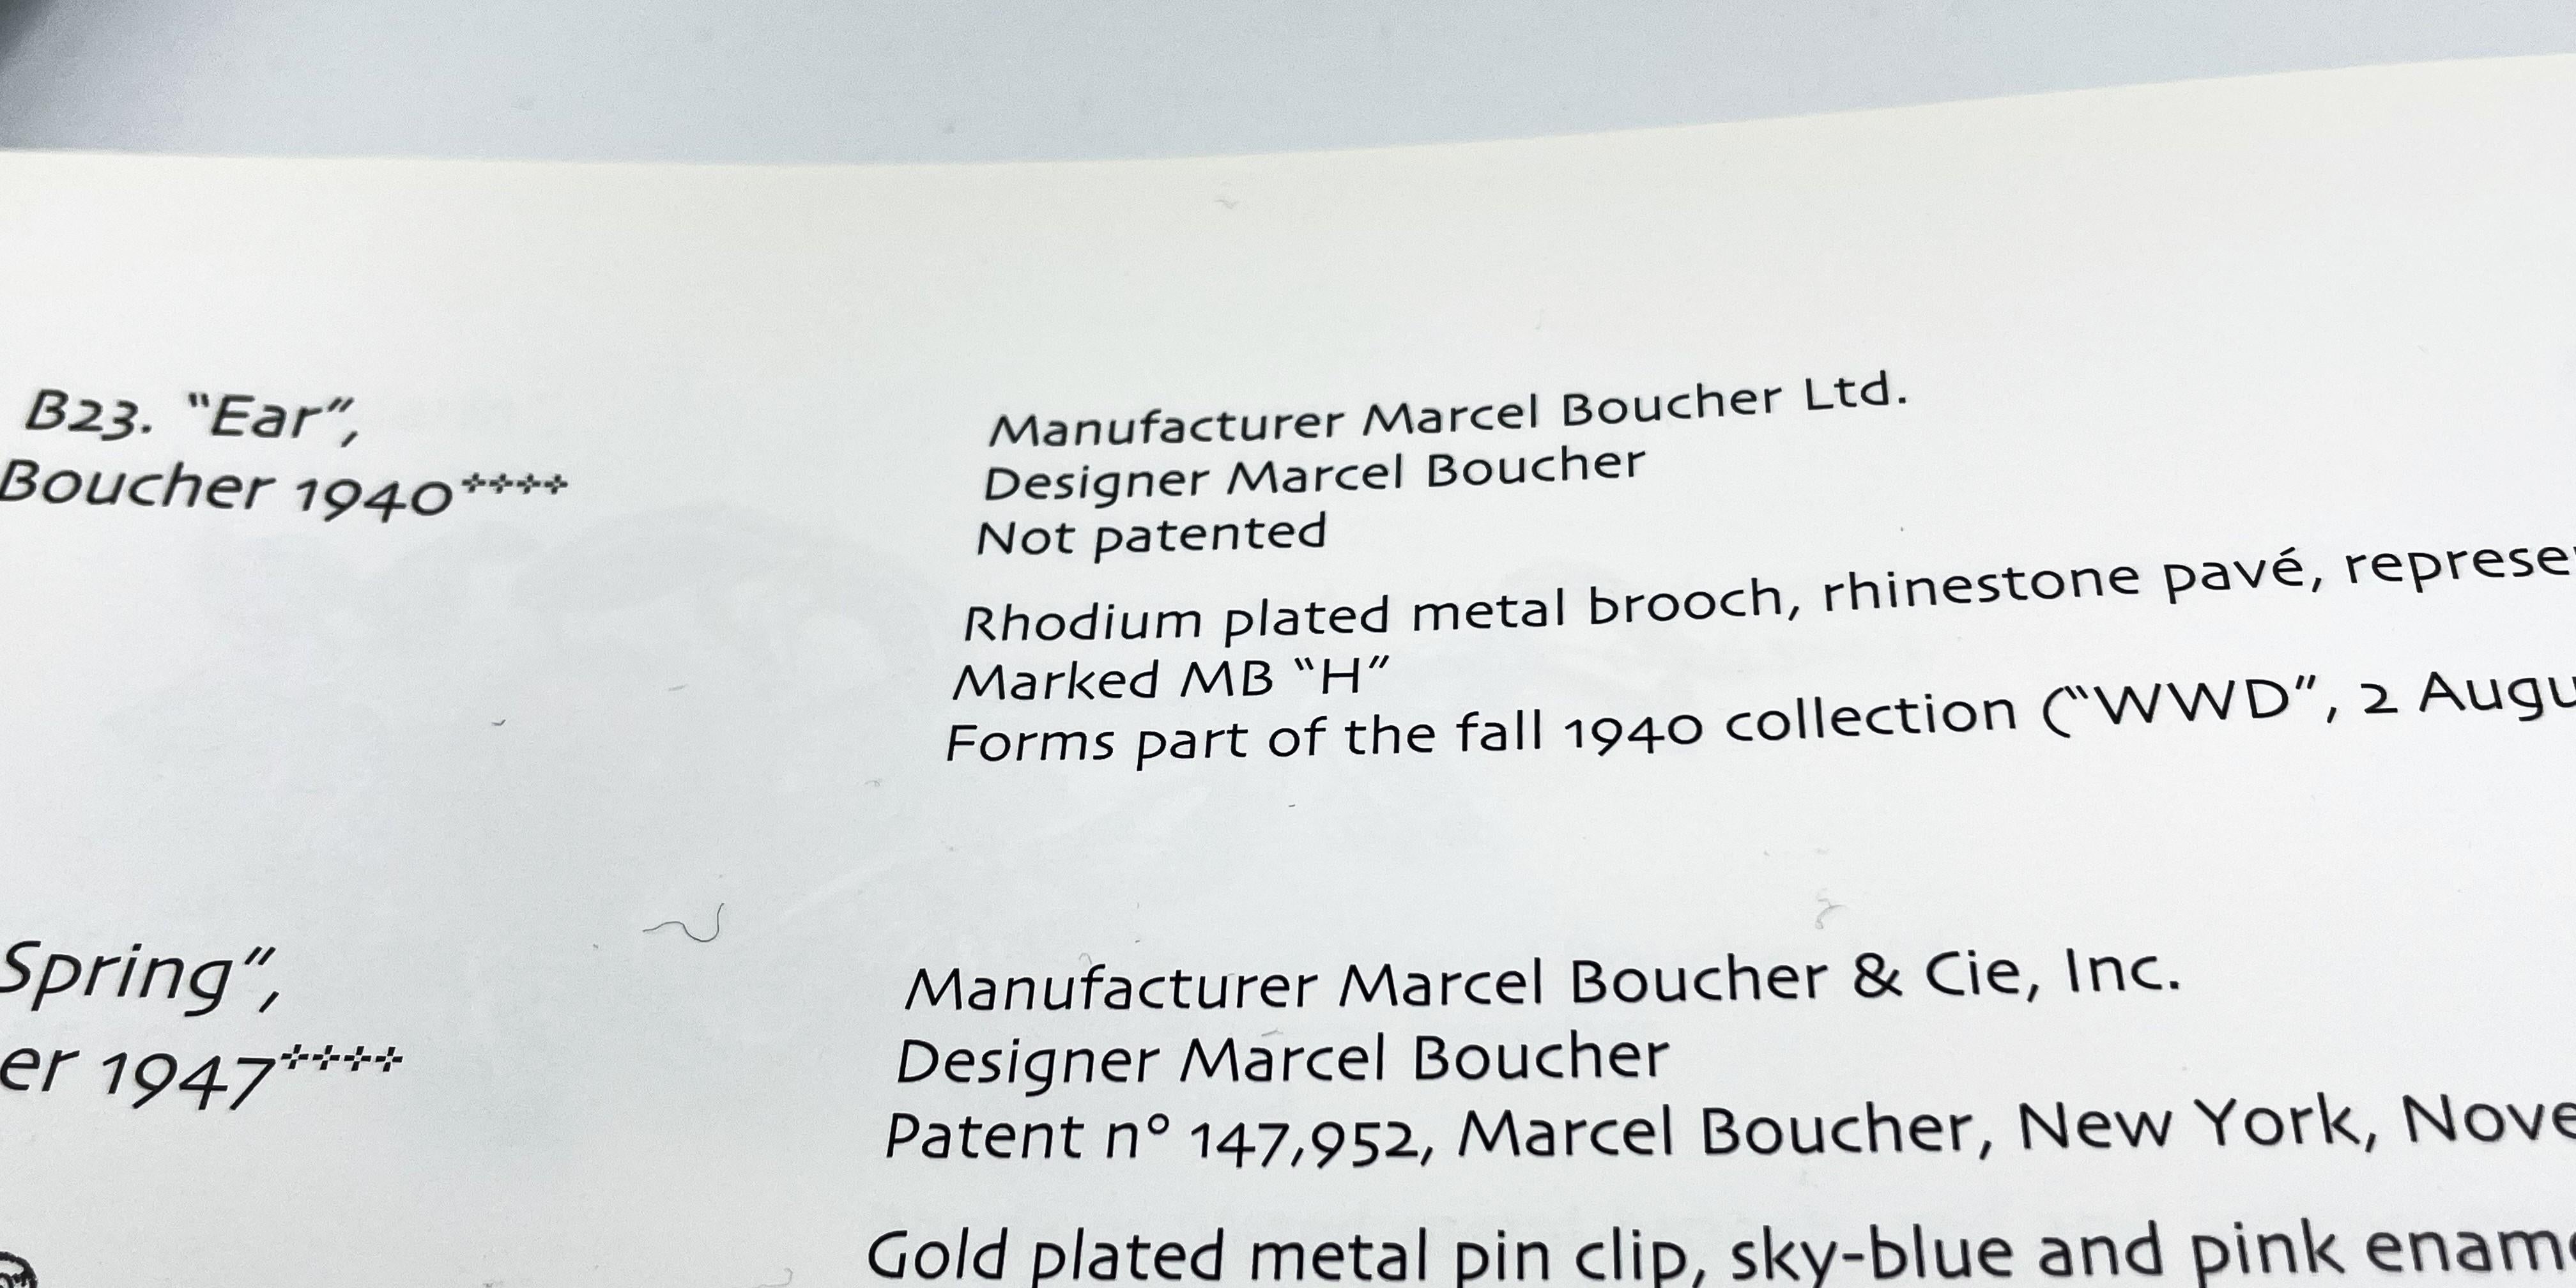 M. BOUCHER SHEAF-OF-WHEAT BROOCH, Rhodium plated, rhinestones pavé, 1940's USA For Sale 4